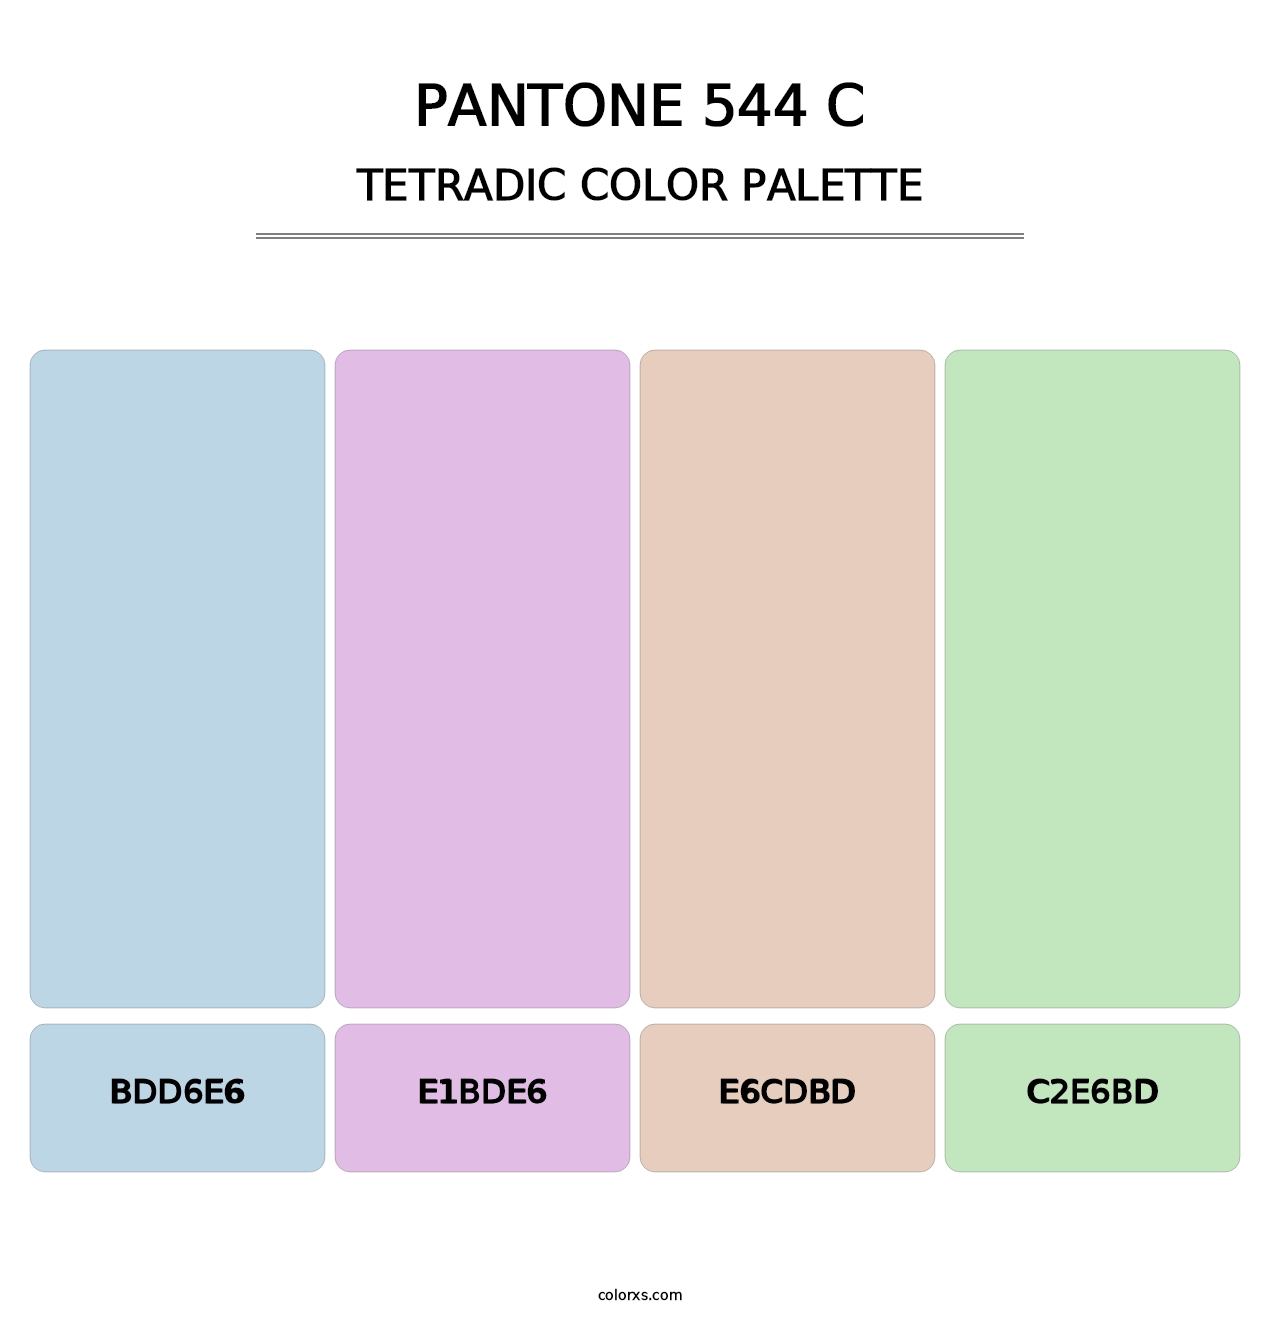 PANTONE 544 C - Tetradic Color Palette